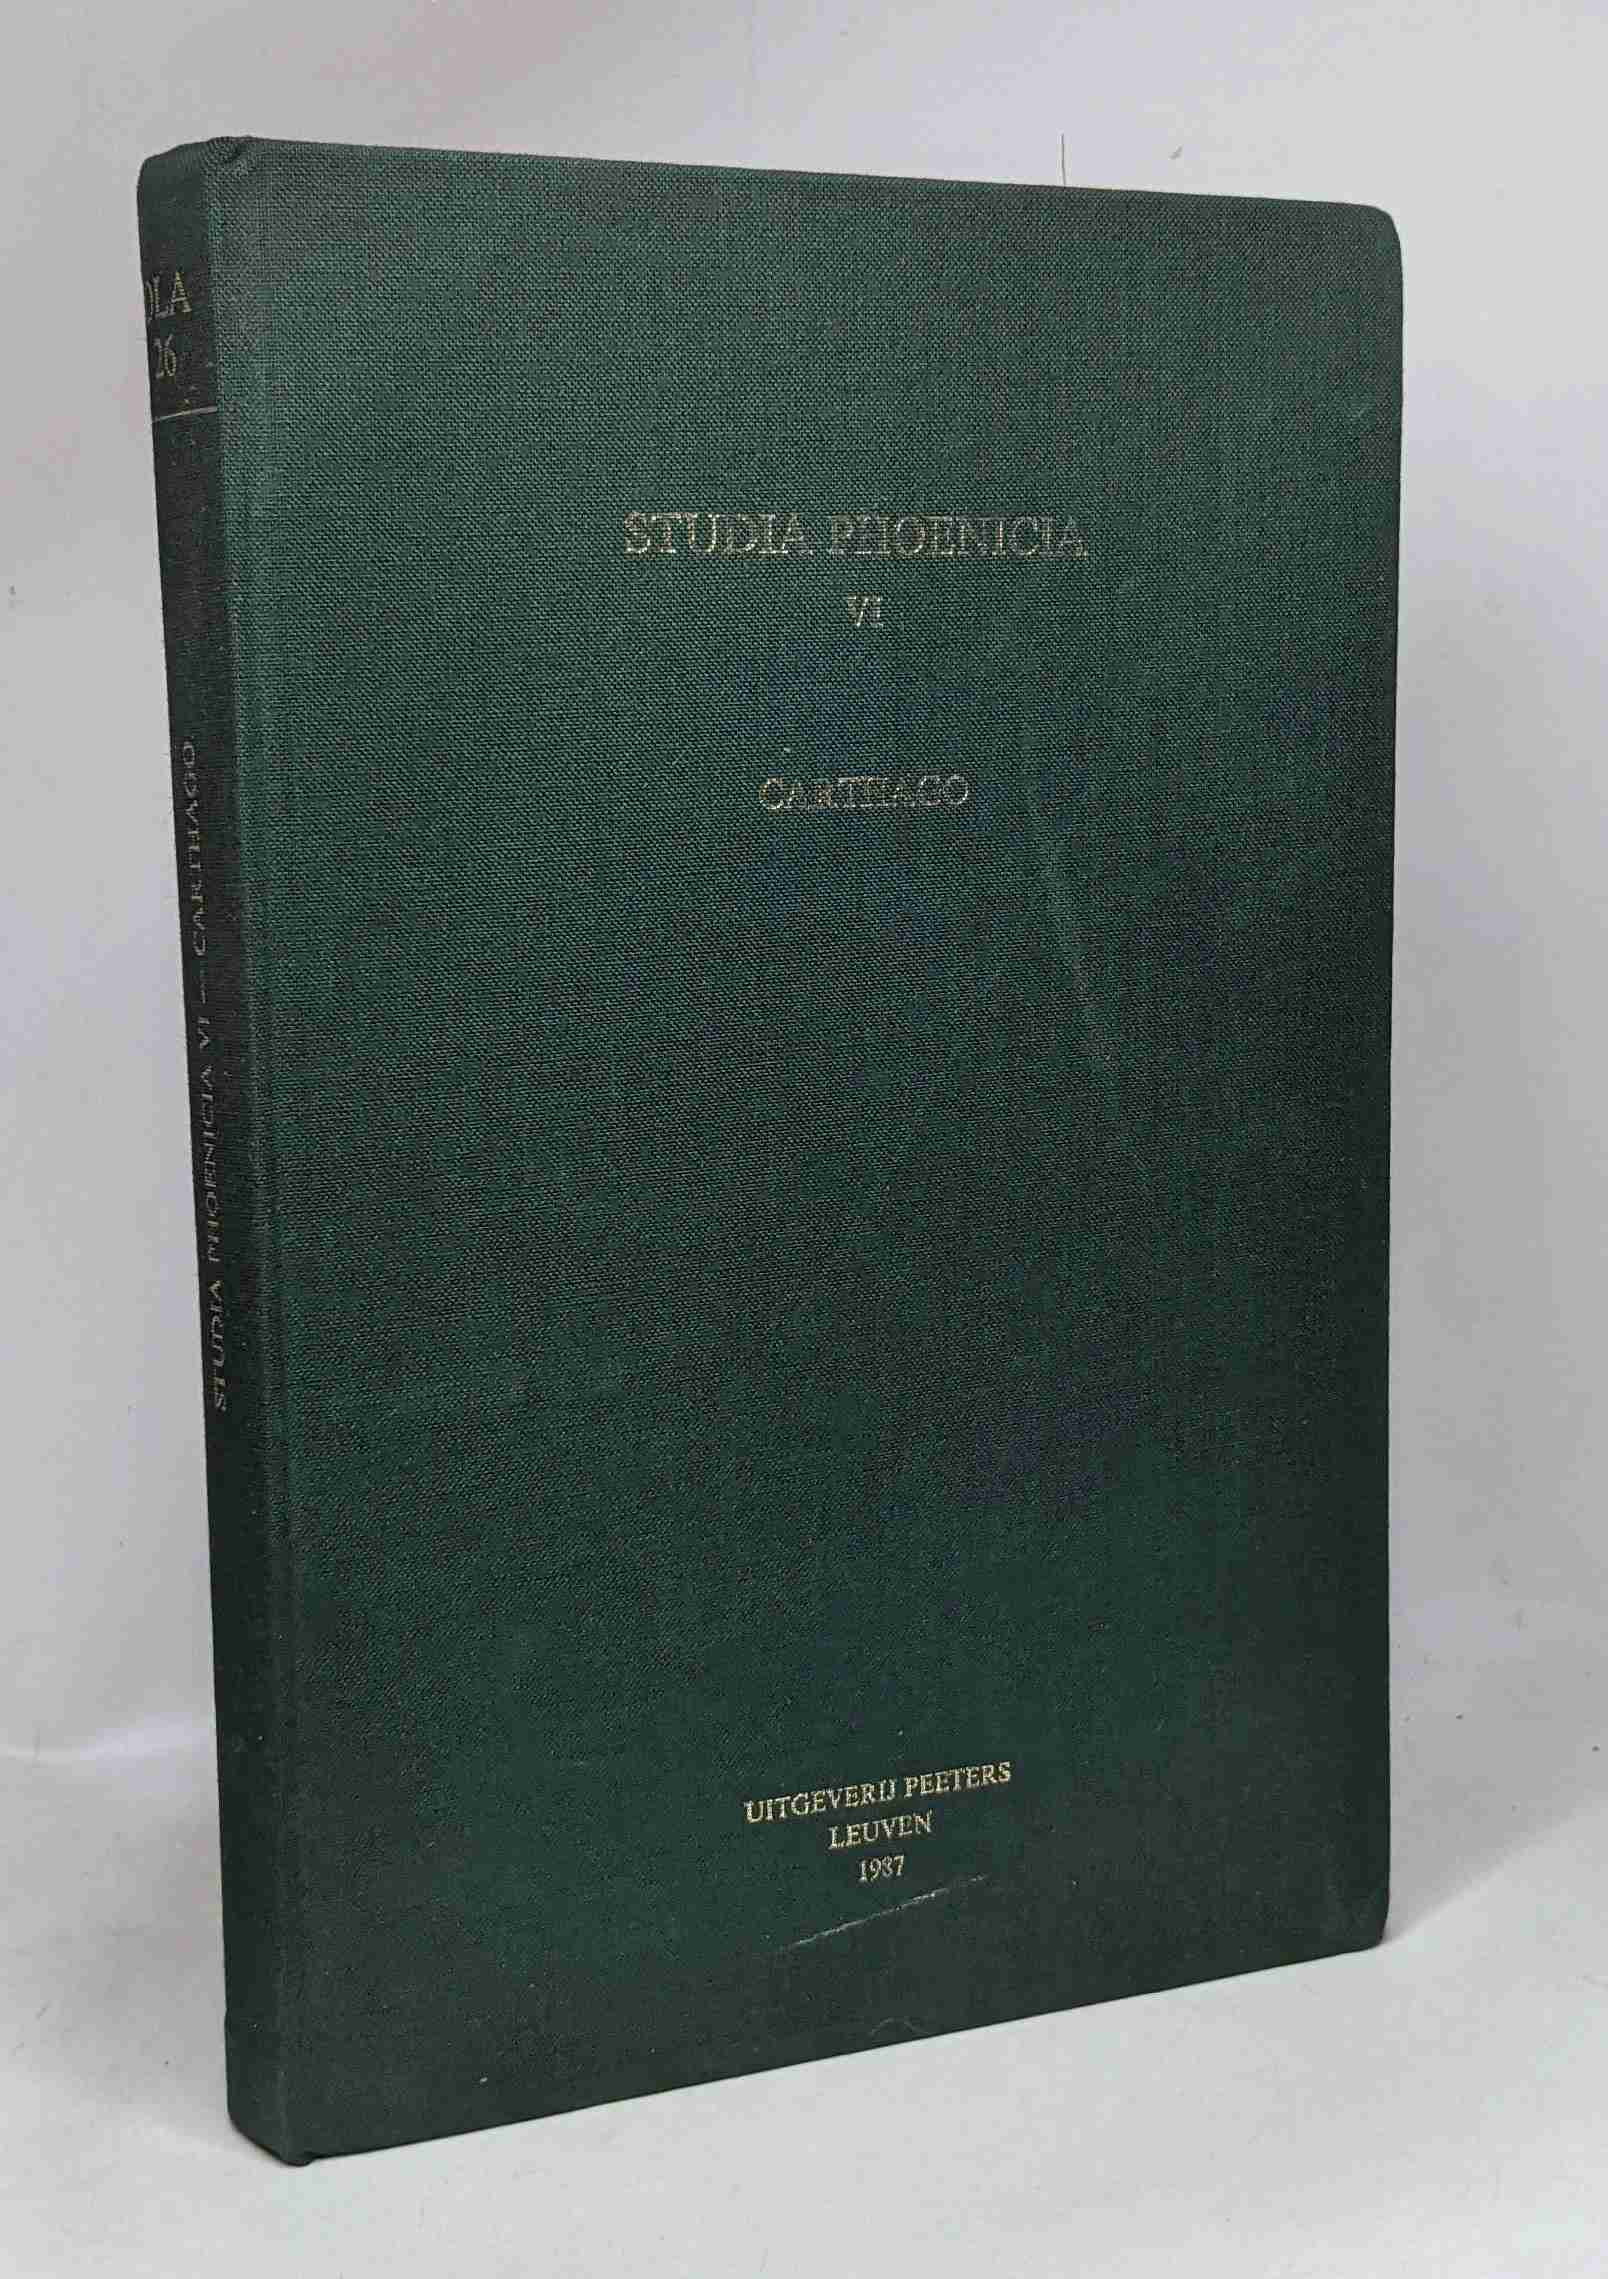 Carthago - Studia Phoenicia IV - acta Colloquii Bruxellensis habiti 2 et 3 mensis Maii anni 1986 - Lipinski E